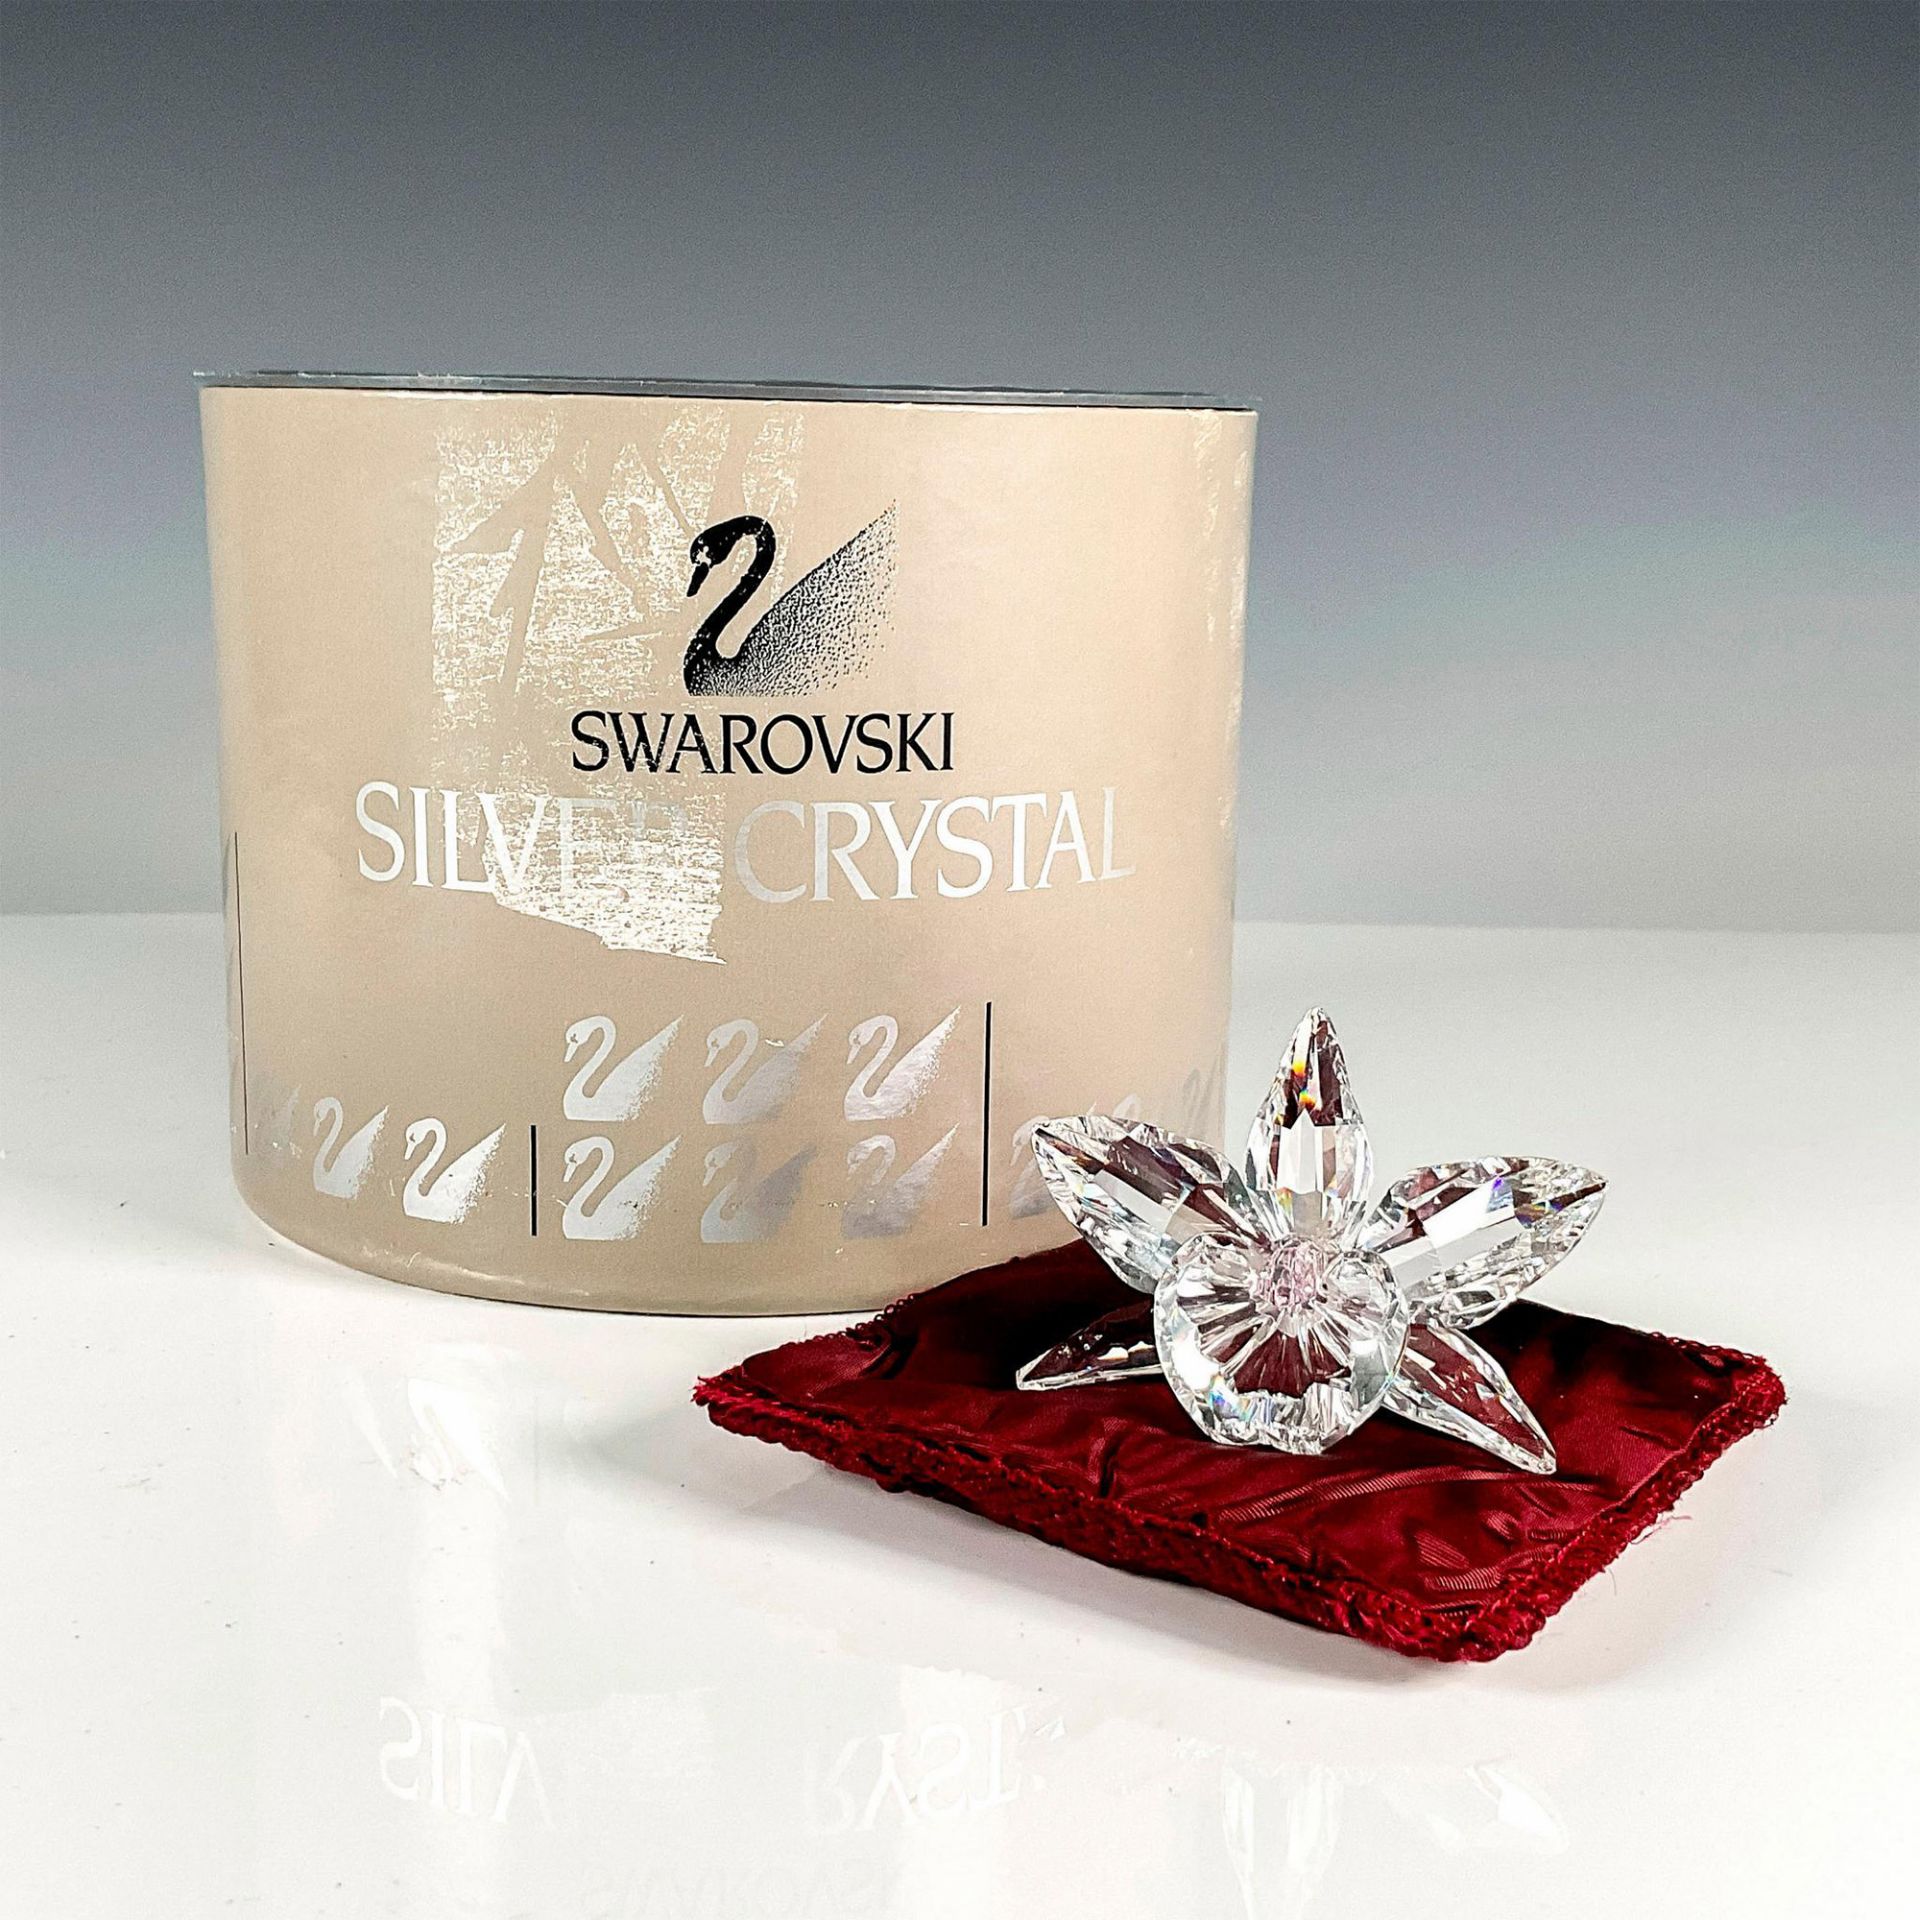 Swarovski Silver Crystal Figurine, Orchid Pink - Image 4 of 4